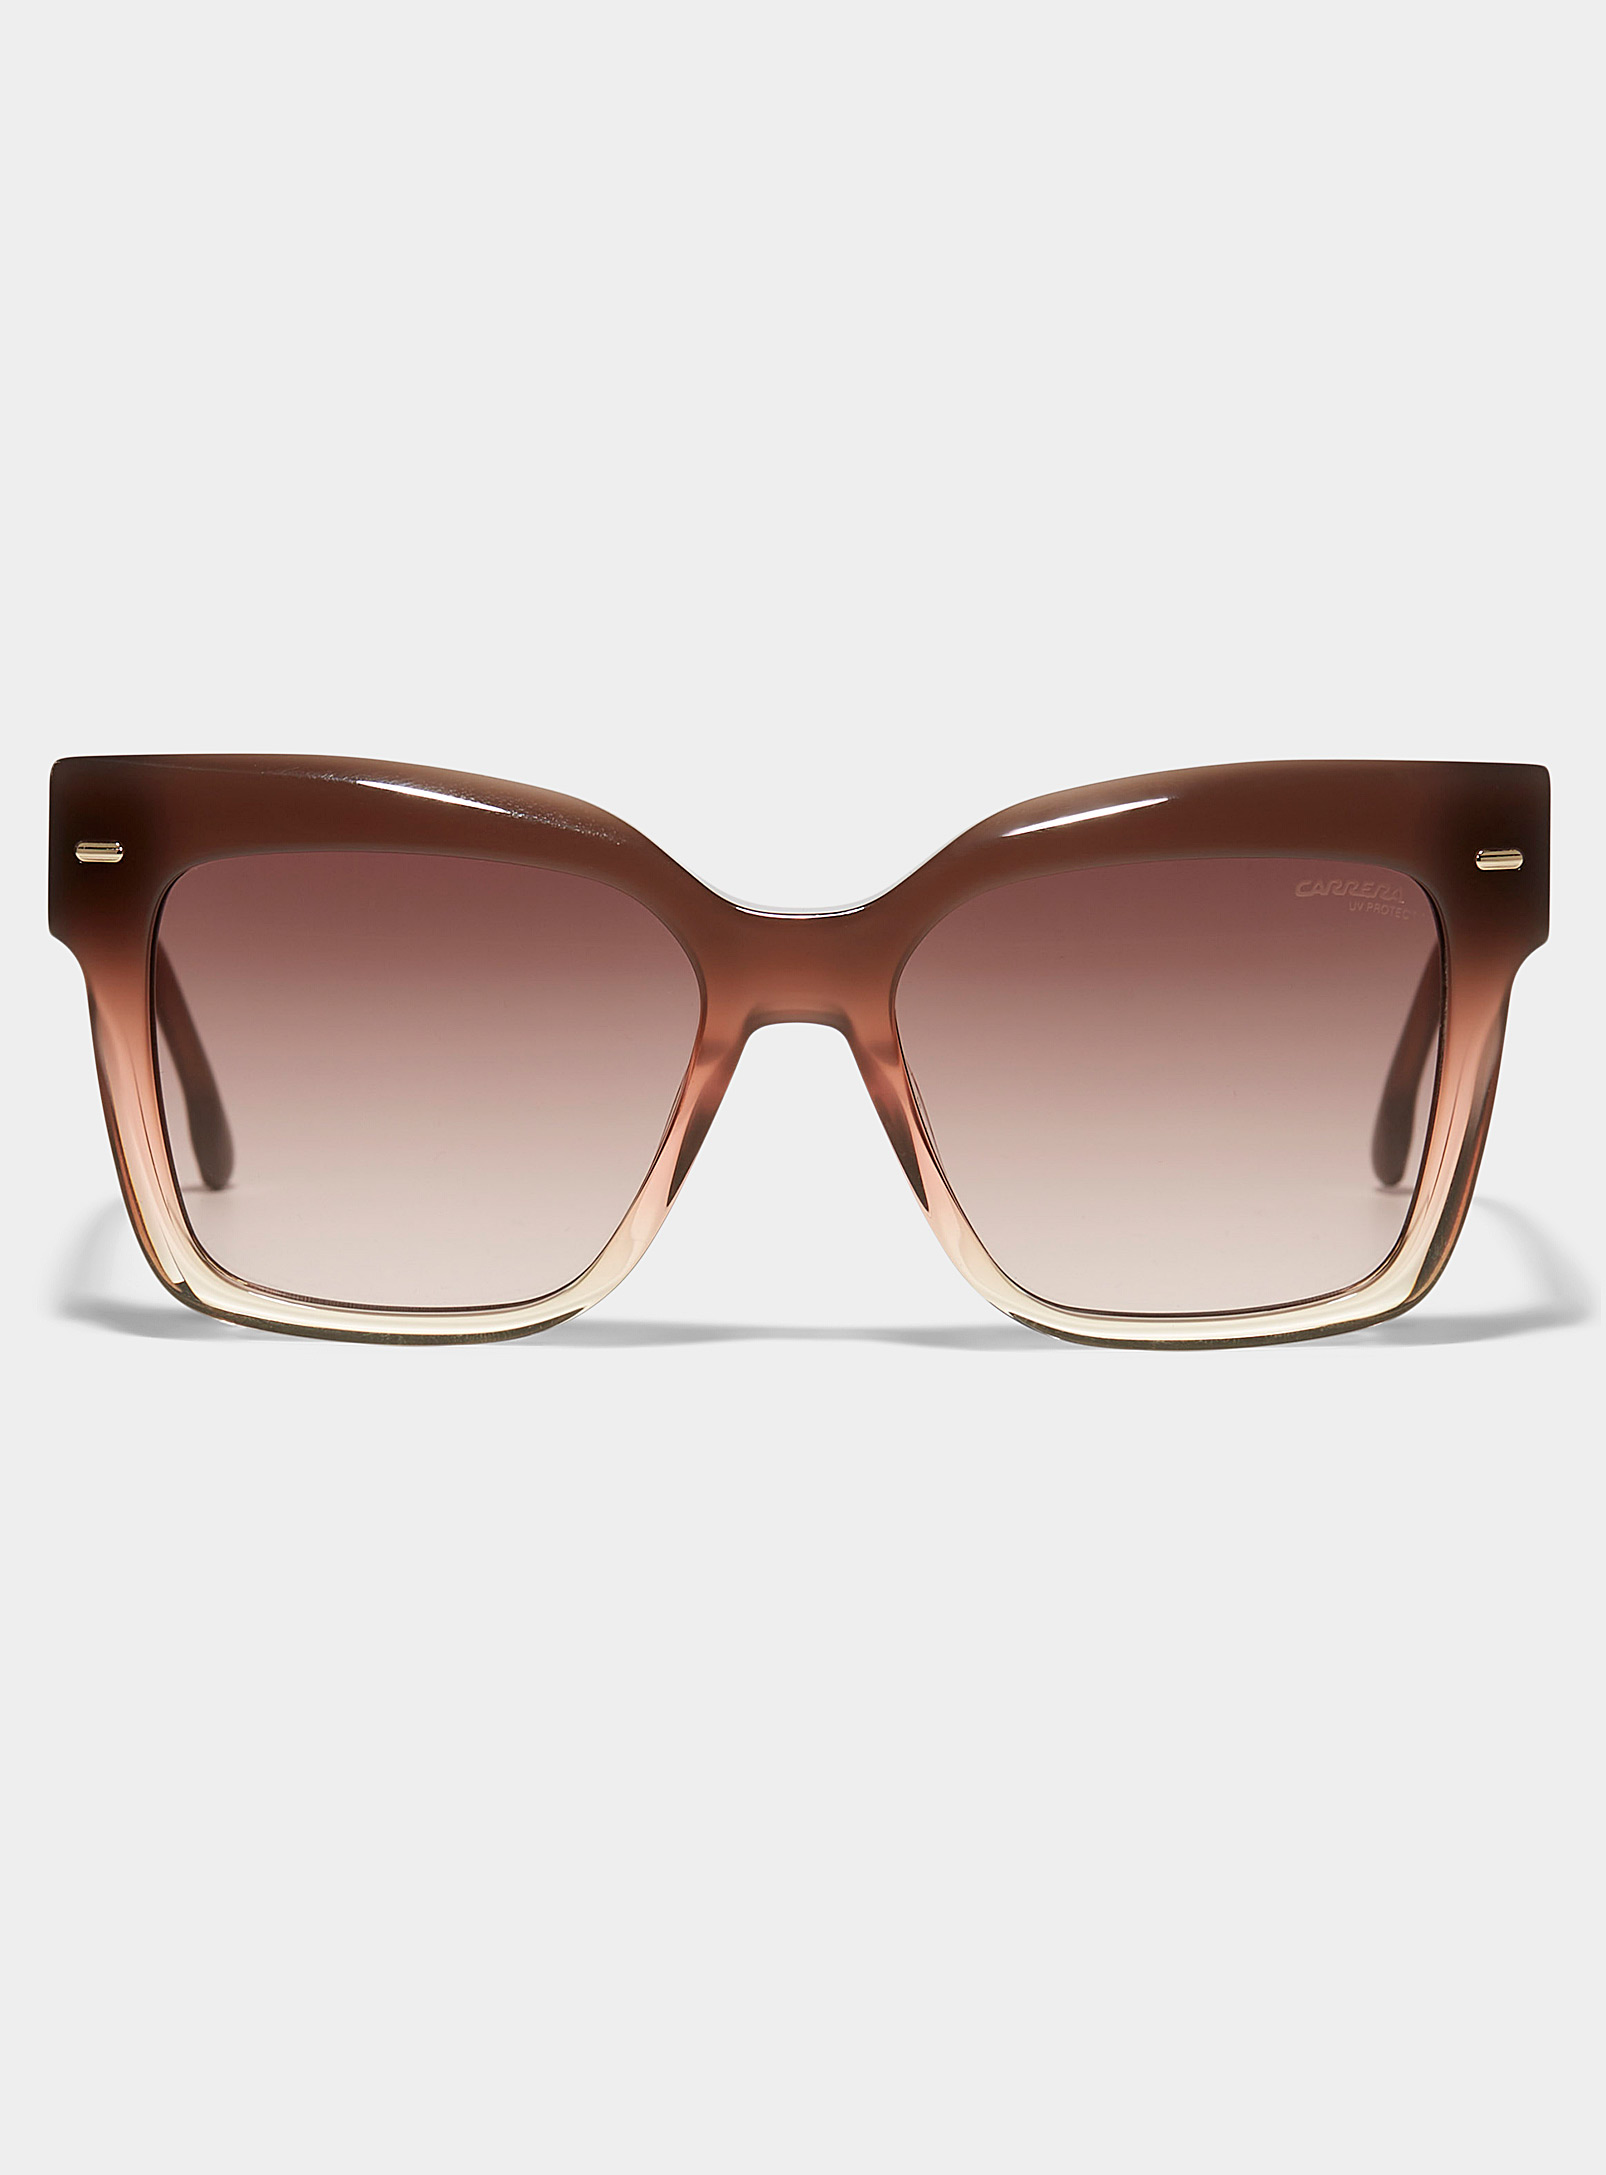 Carrera - Women's Graded large square sunglasses